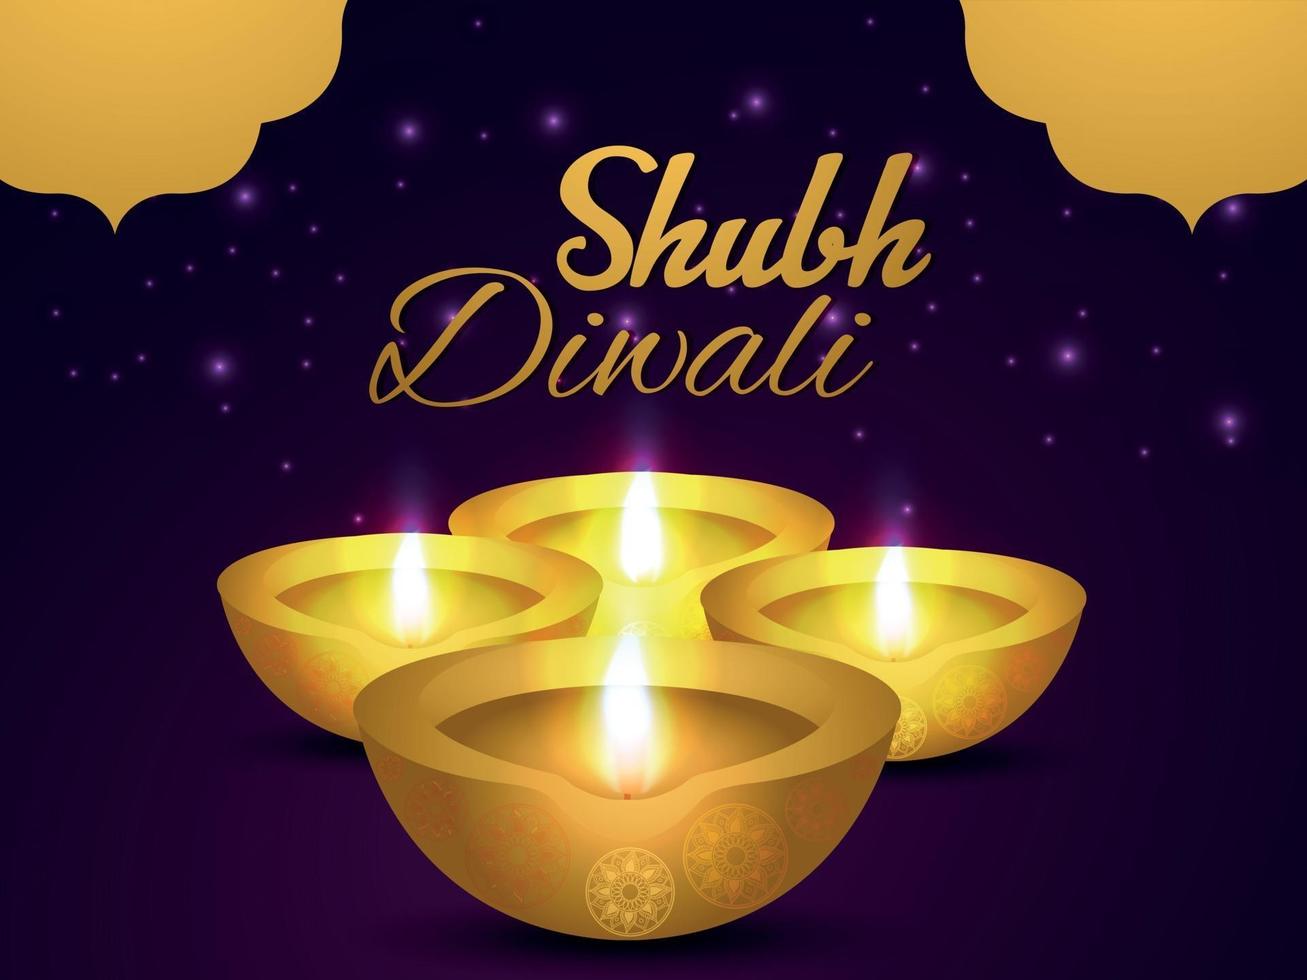 Shubh diwali invitation greeting card with diwali diya on creative background vector